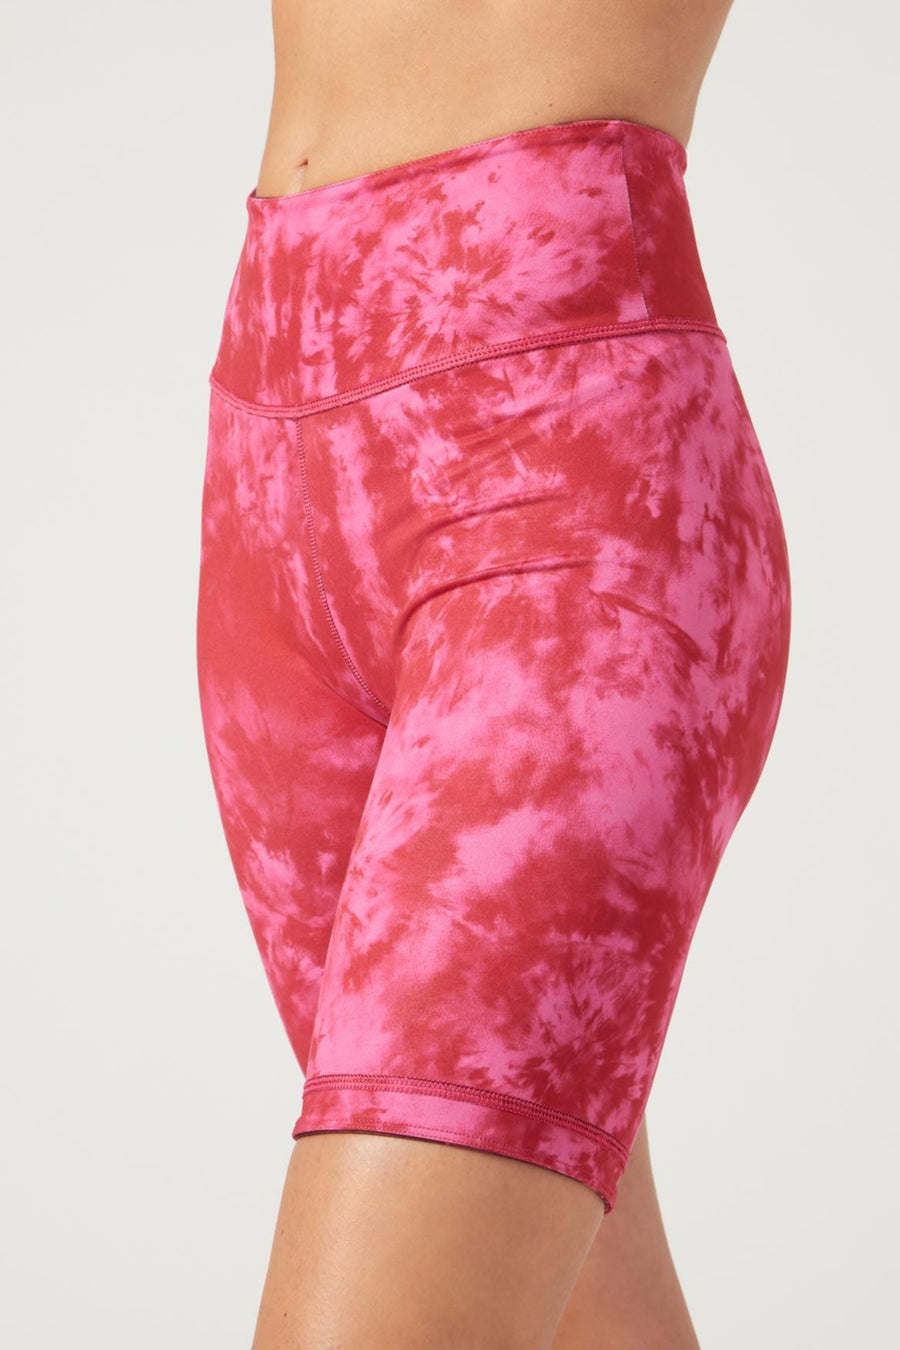 Kurt Reversible Short Neon Pink Flowers